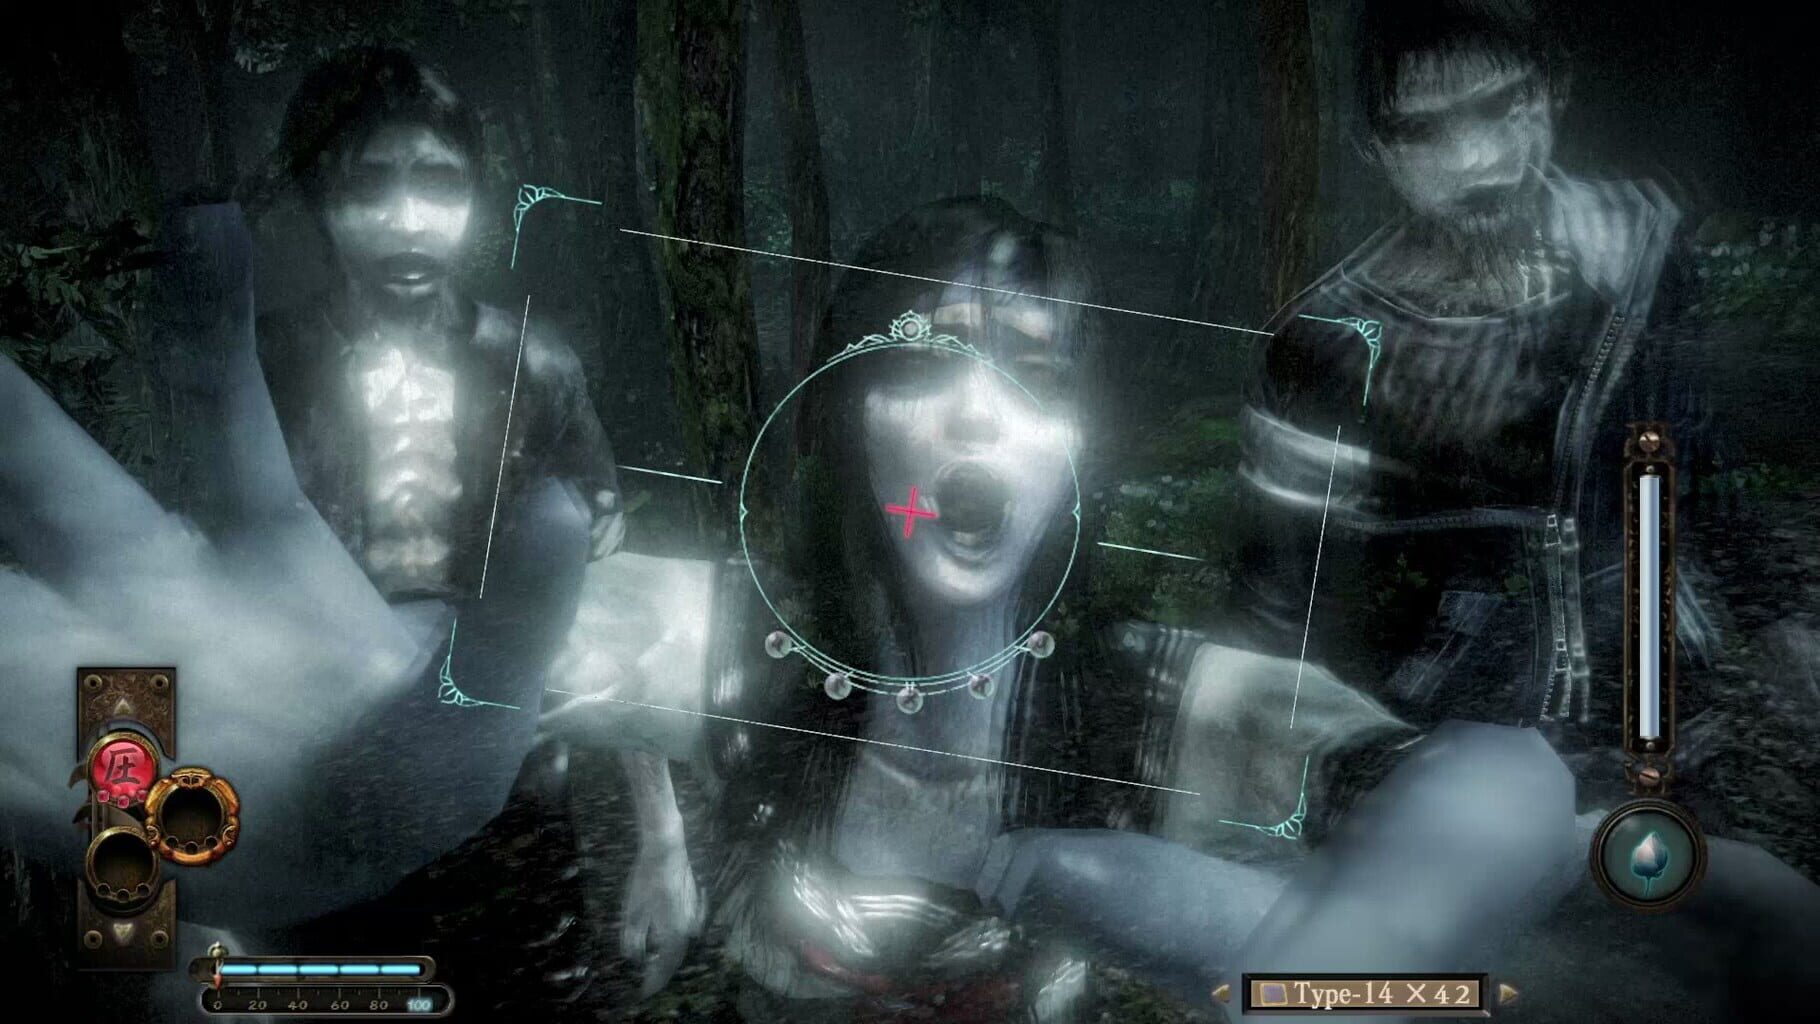 Fatal Frame: Maiden of Black Water - Digital Deluxe Edition screenshot